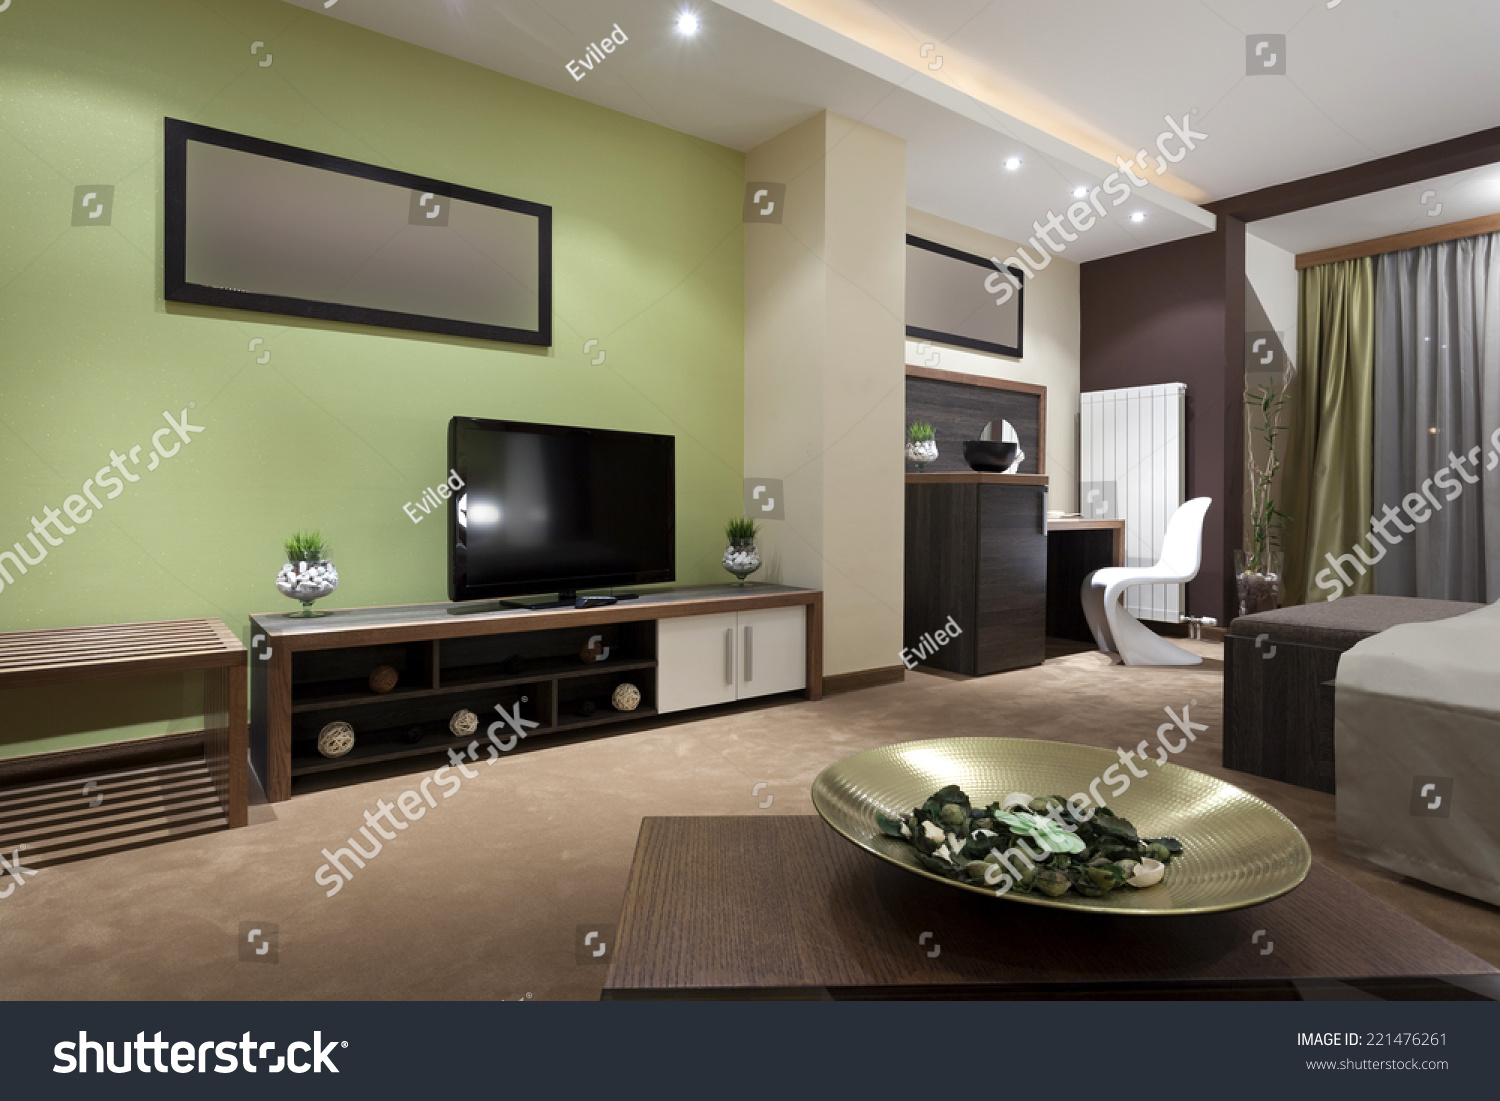 Specious hotel bedroom interior  in the evening #221476261